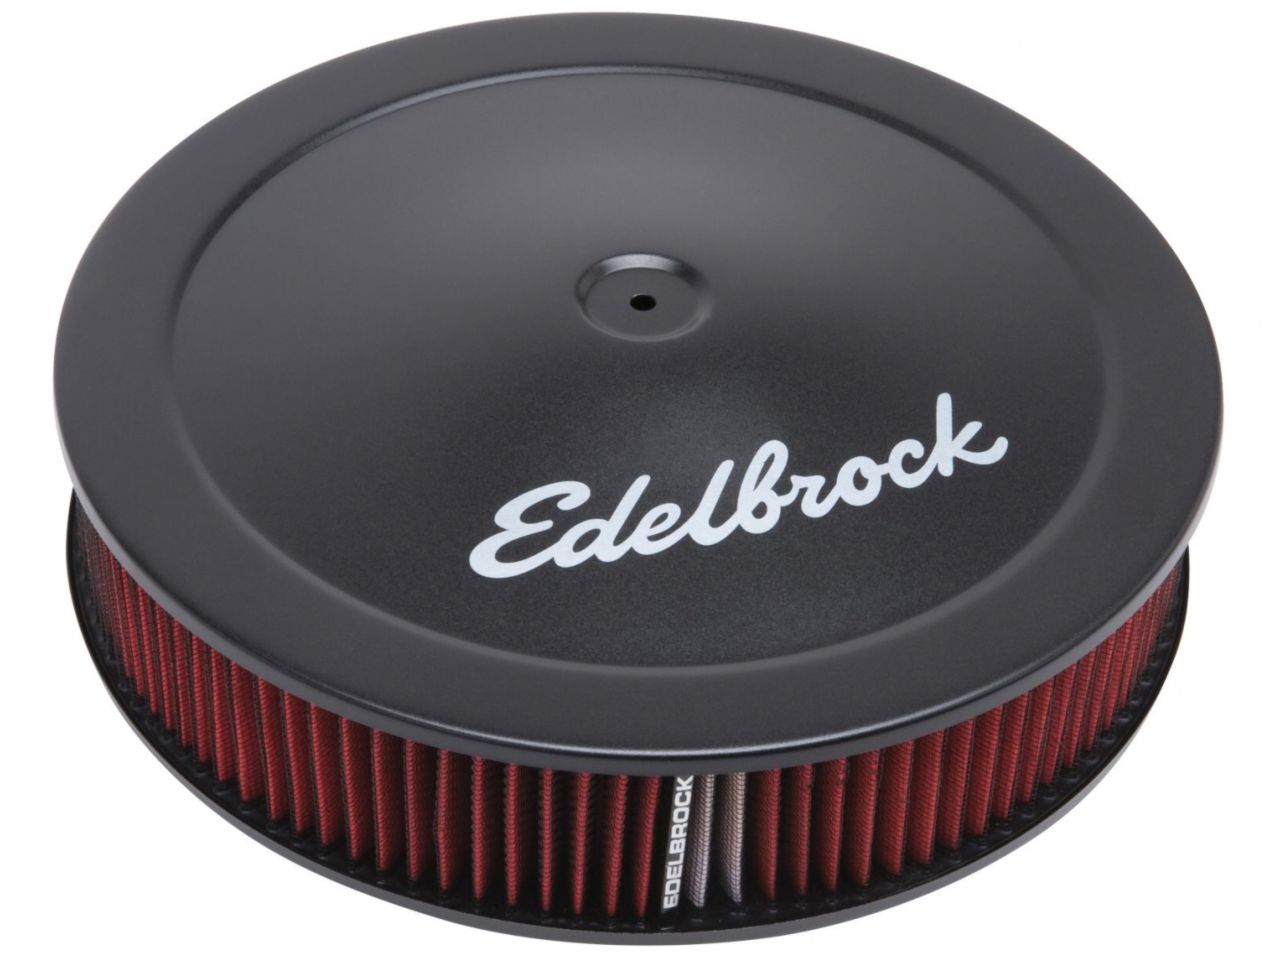 Edelbrock Air Cleaner, Pro-flo Series, Round, 14 In. Diameter, Cloth Element